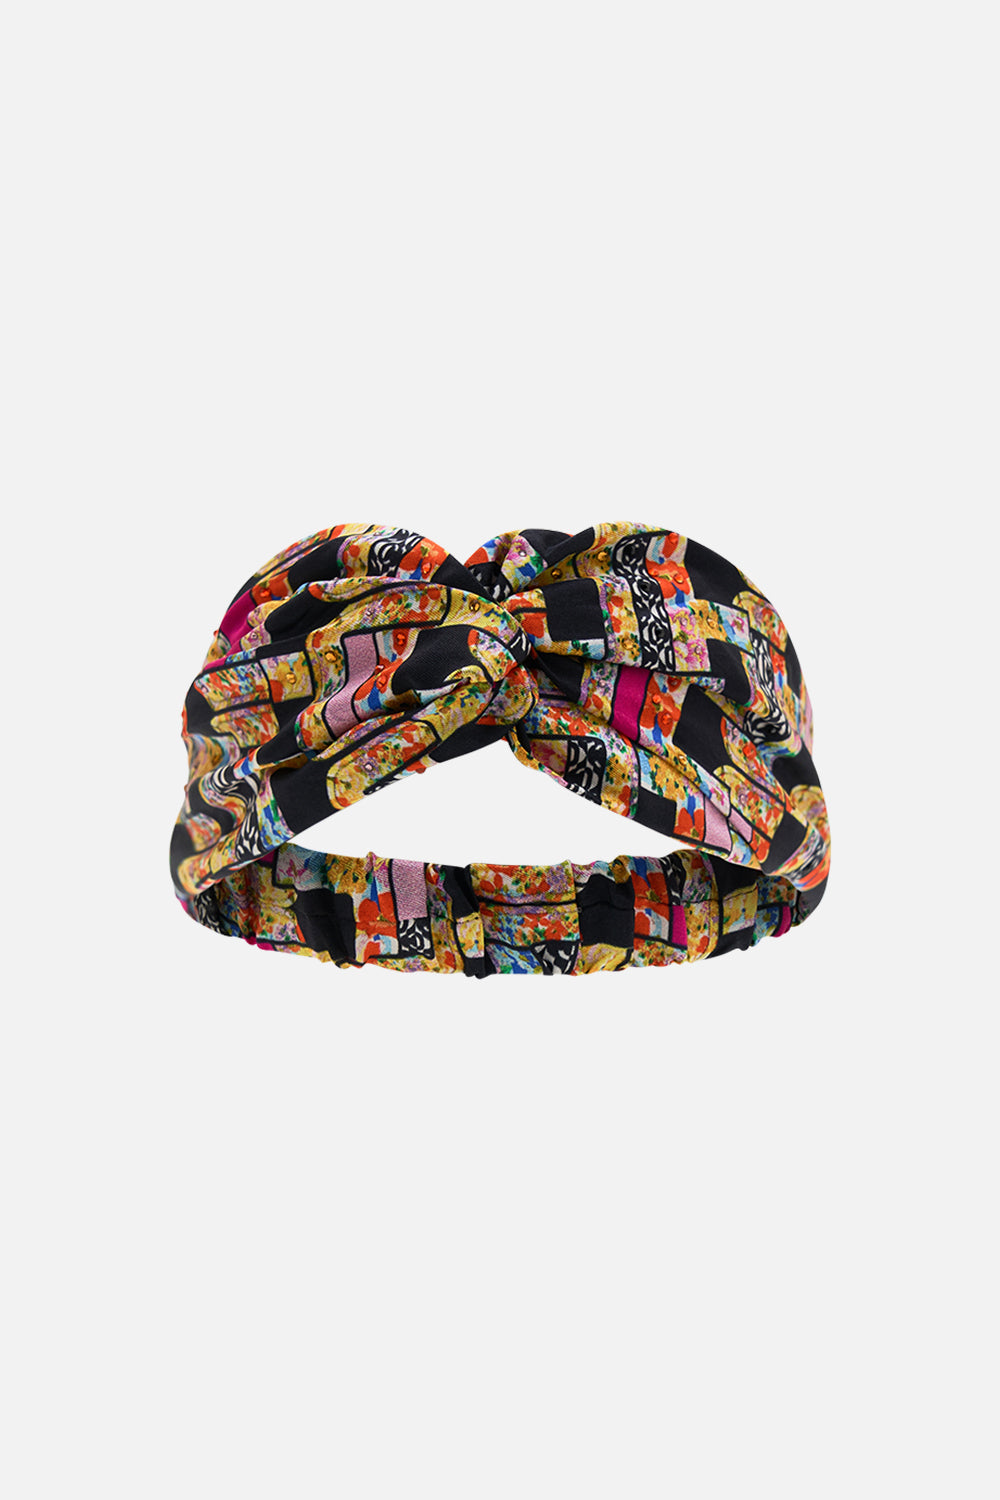 Product view of CAMILLA silk twist headband in Signora Milano print